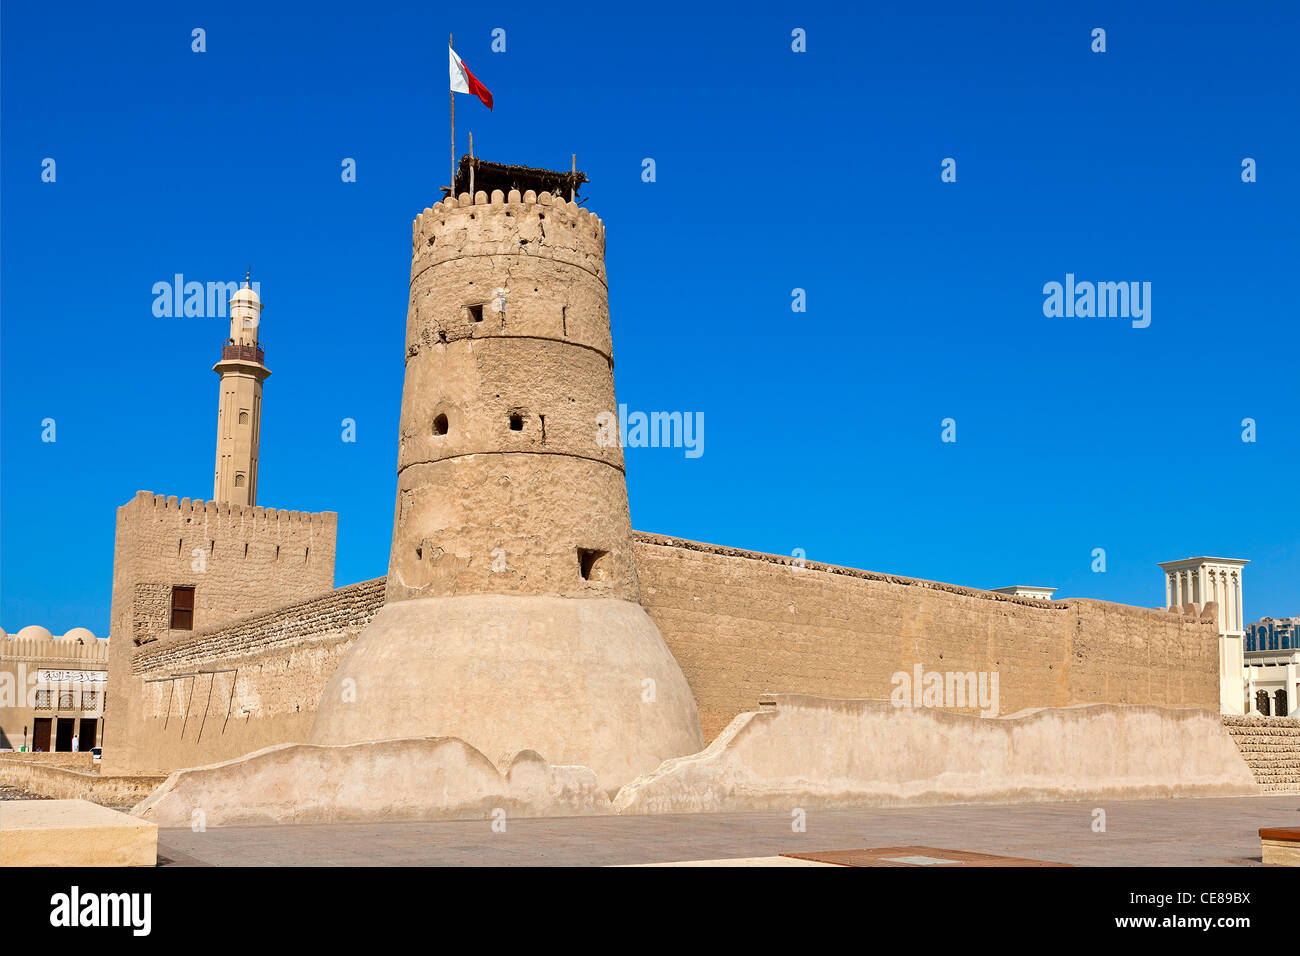 Dubai, The towers of the Al Fahidi Fort which houses the Dubai Museum, Stock Photo